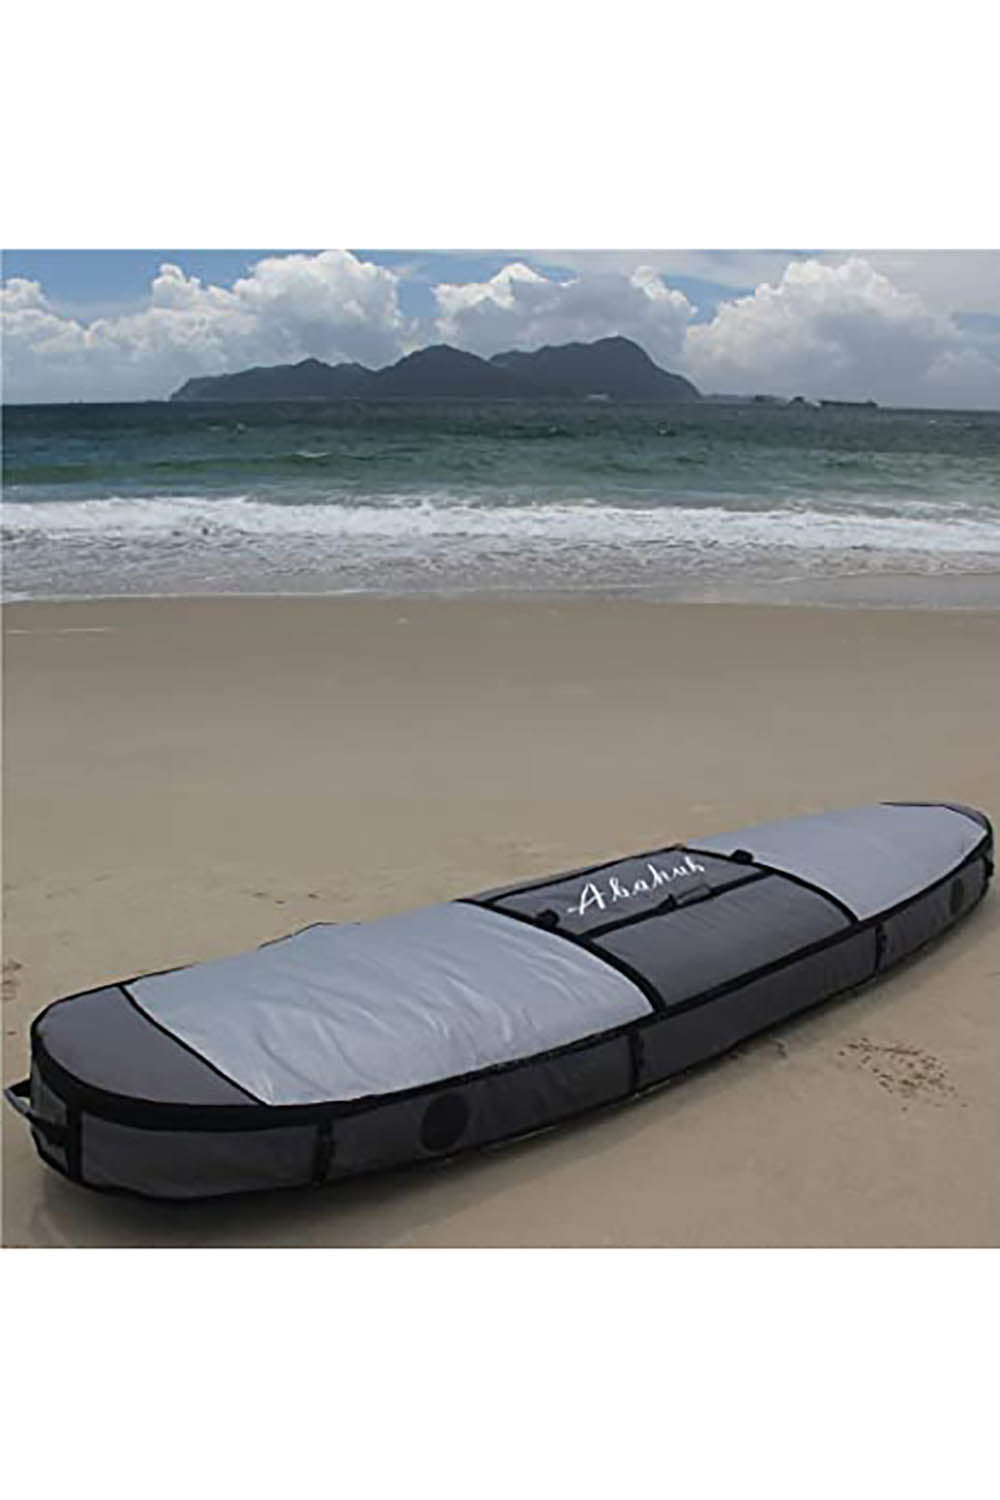 Abahub Premium Surfboard Travel Bag – AbaHub Official